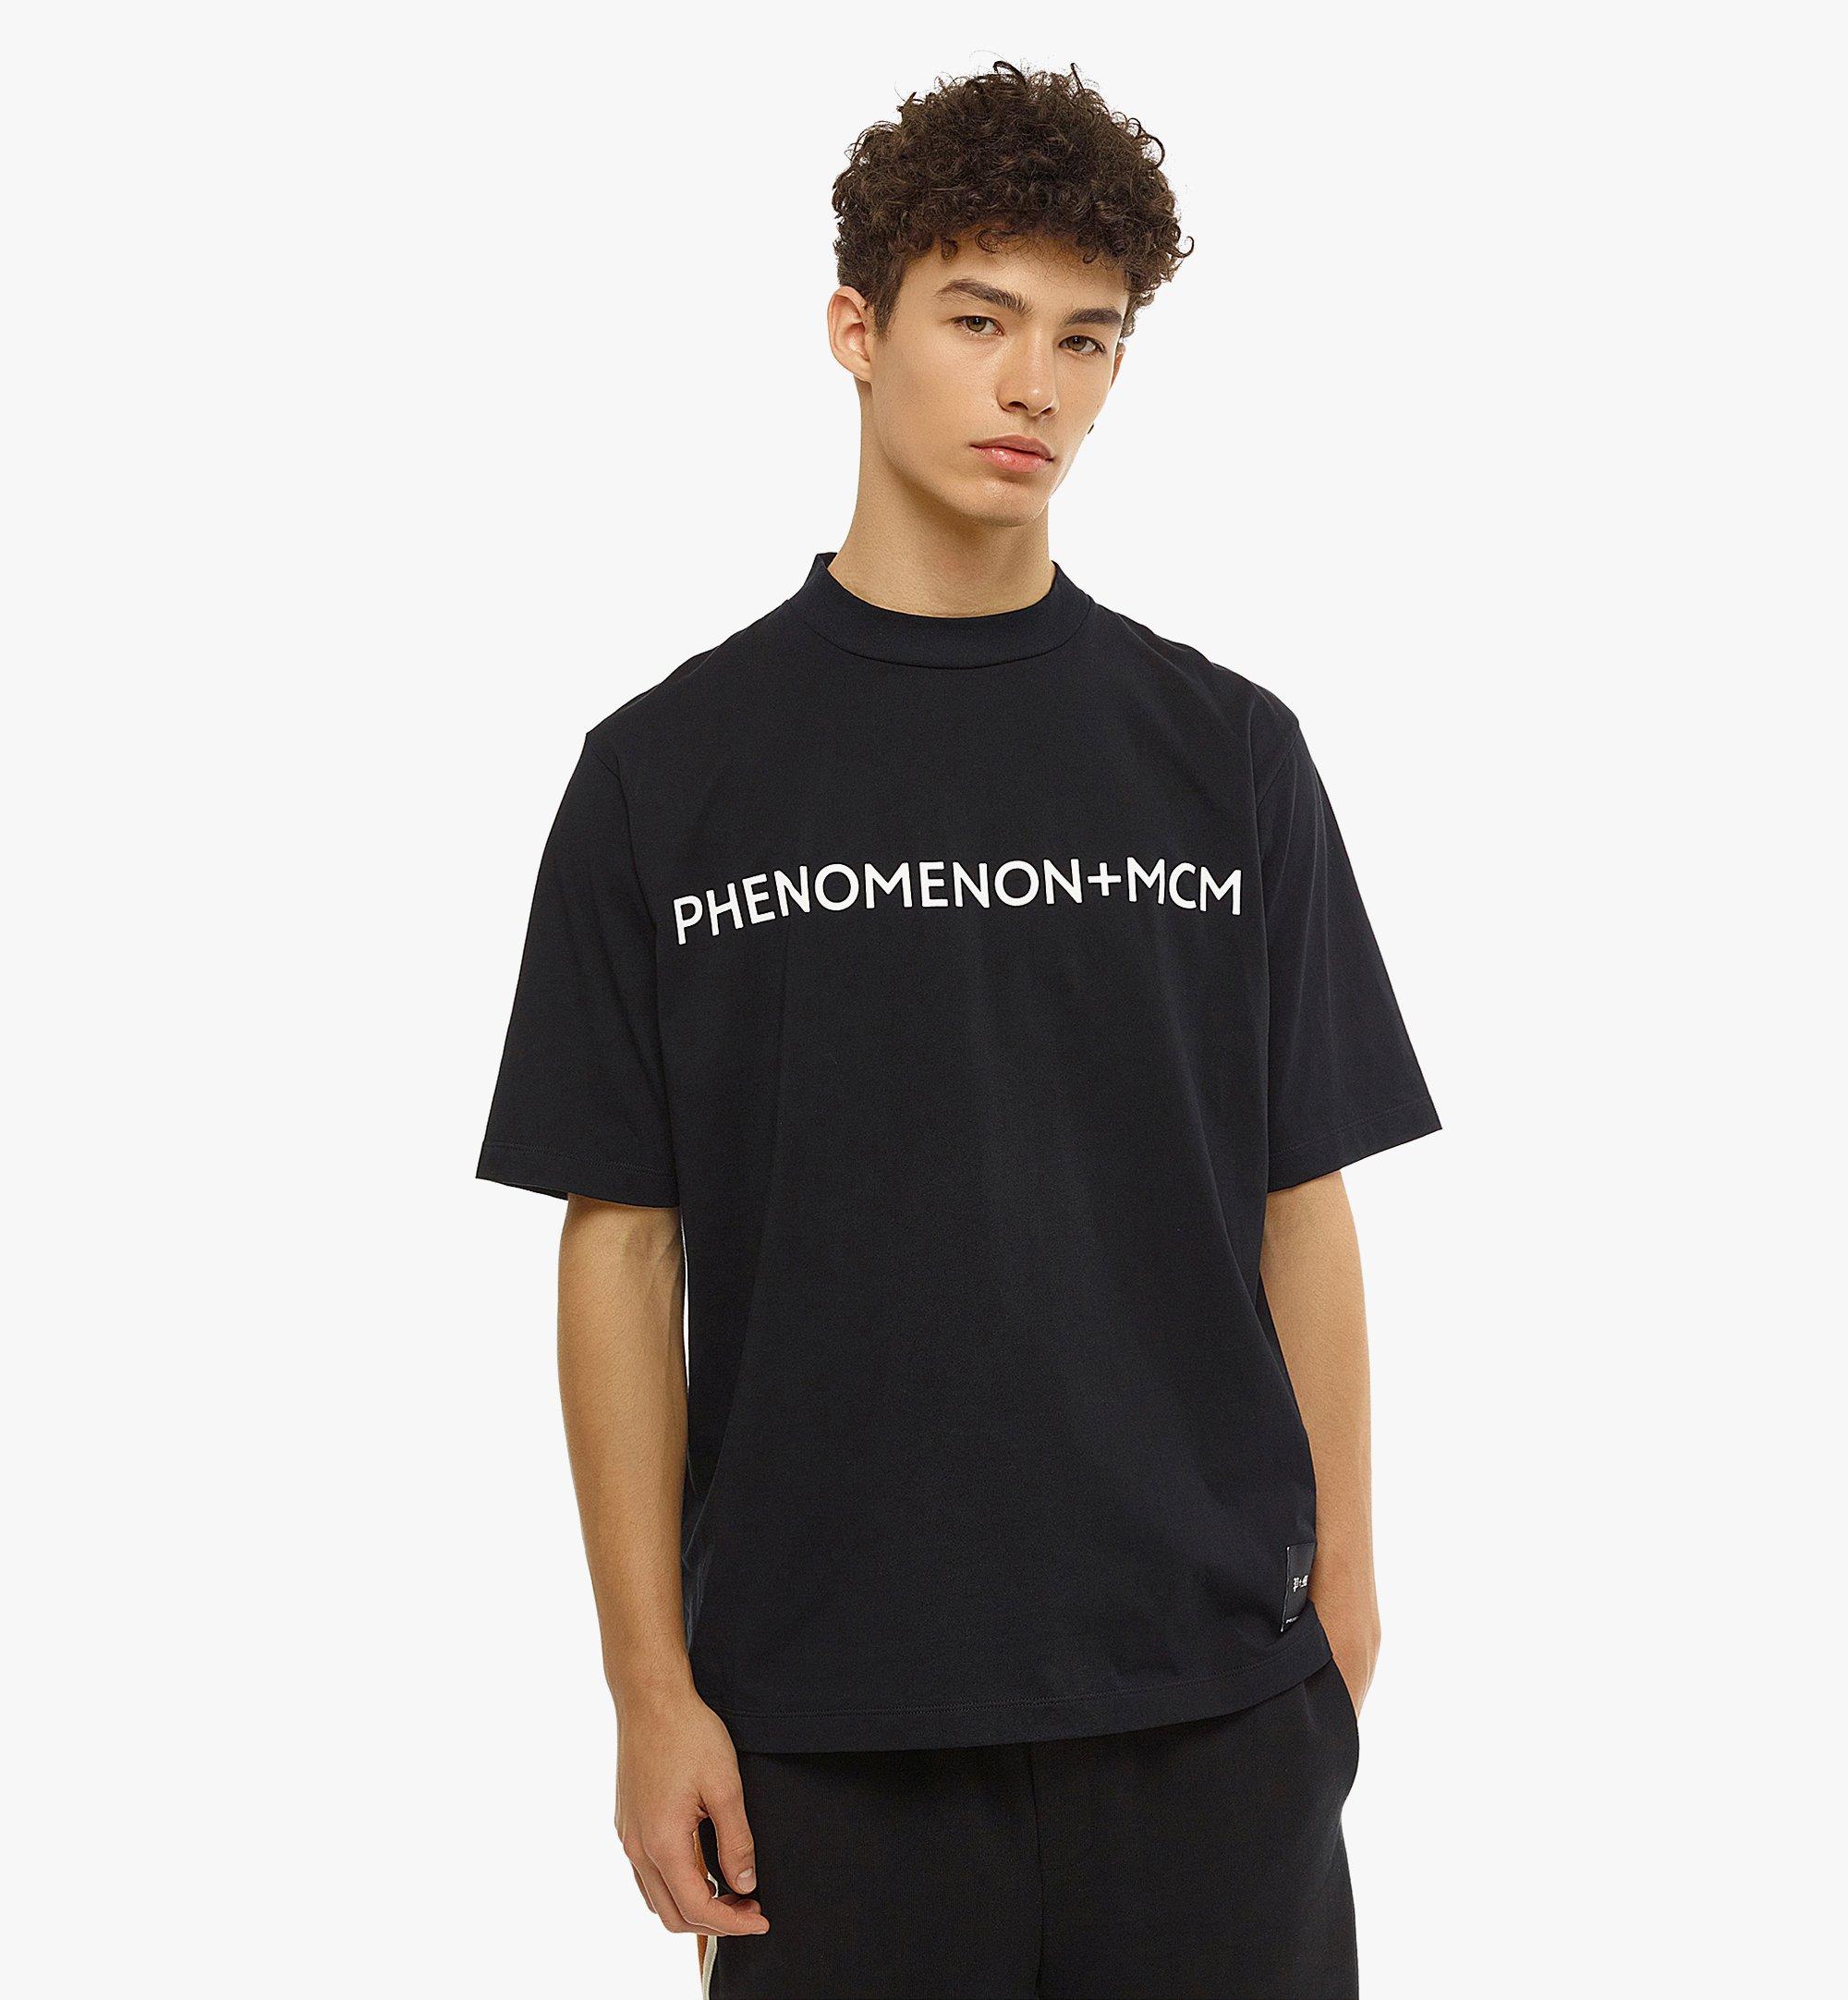 X-Large P+M (PHENOMENON x MCM)ロゴTシャツ Black | MCM ®JP